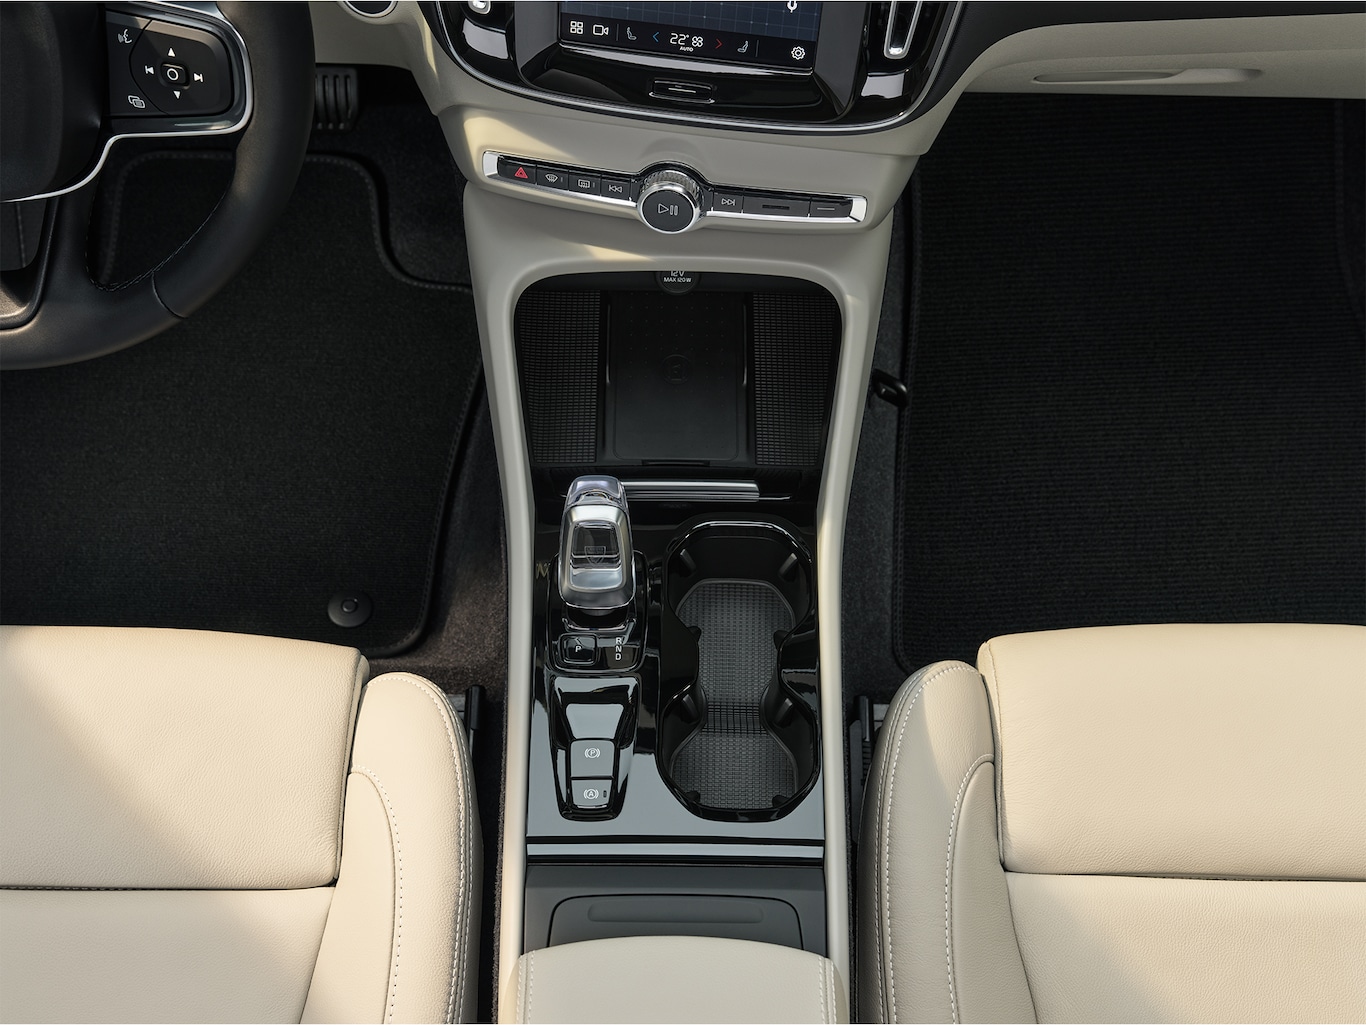 A comfortable, qualitative and versatile interior of the Volvo XC40 SUV.